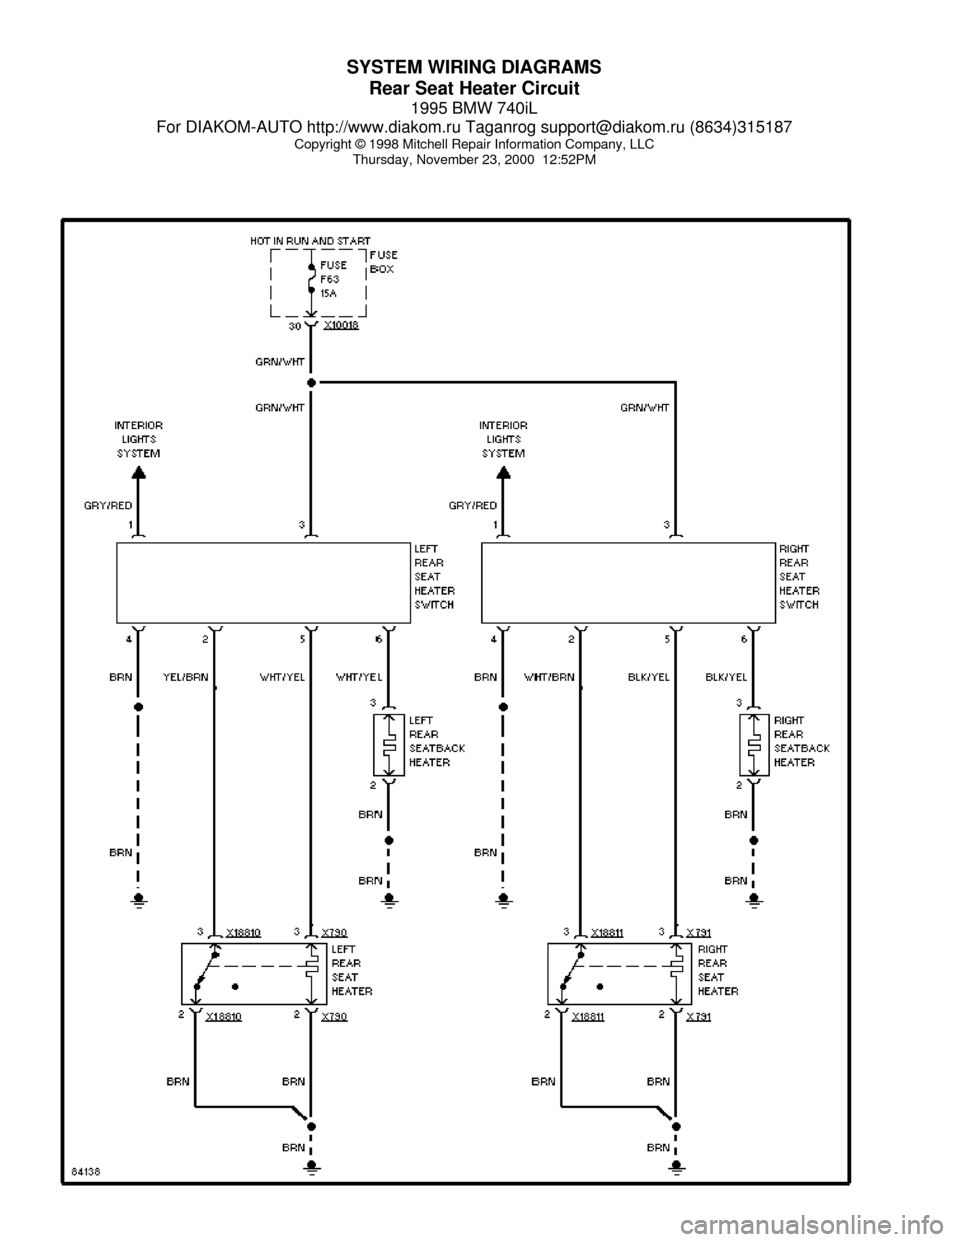 BMW 740il 1995 E38 System Wiring Diagrams SYSTEM WIRING DIAGRAMS
Rear Seat Heater Circuit
1995 BMW 740iL
For DIAKOM-AUTO http://www.diakom.ru Taganrog support@diakom.ru (8634)315187
Copyright © 1998 Mitchell Repair Information Company, LLC
T